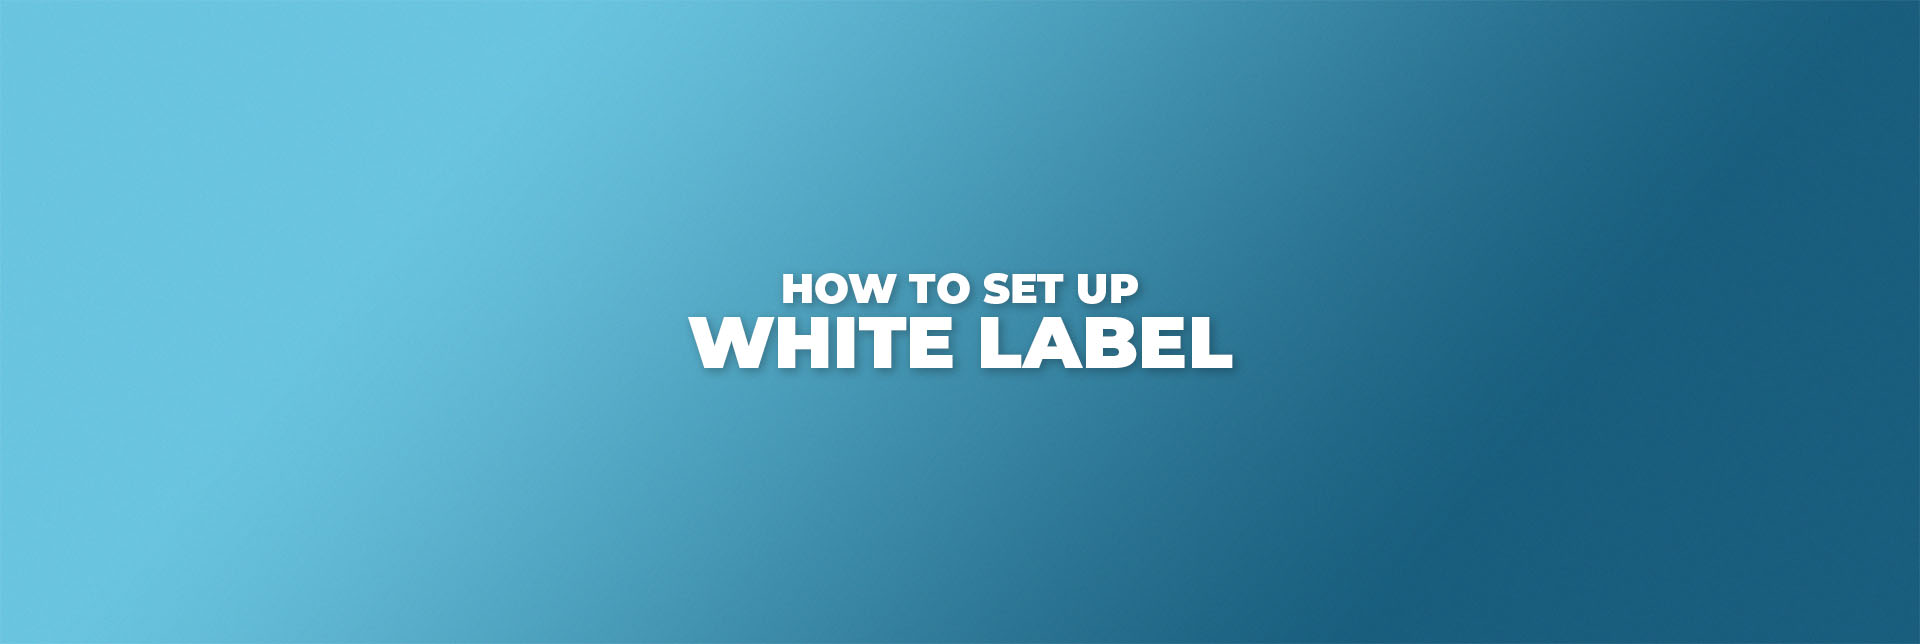 White Label Setup